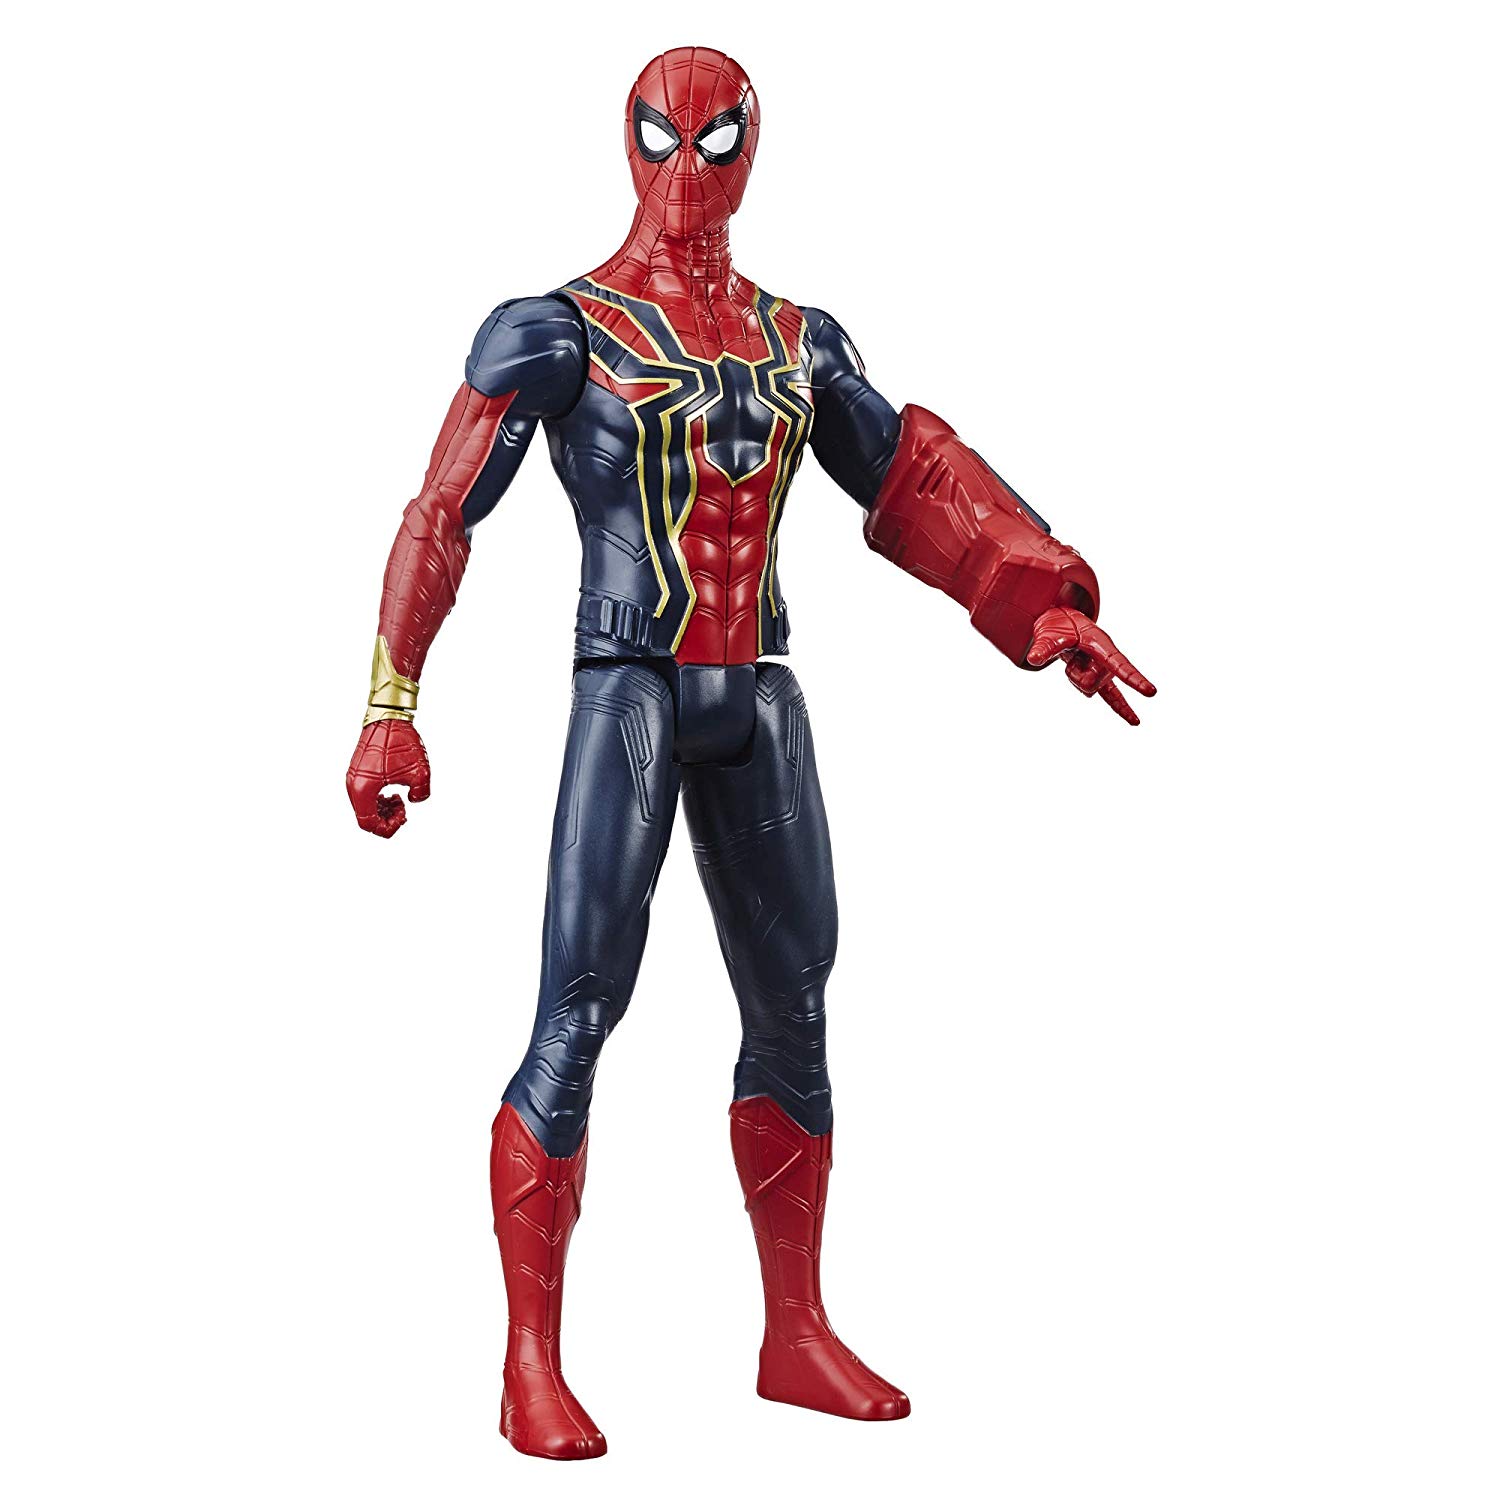 Avengers Marvel Hero Series Iron Spider 12-Inch-Scale Super Hero Action Figure